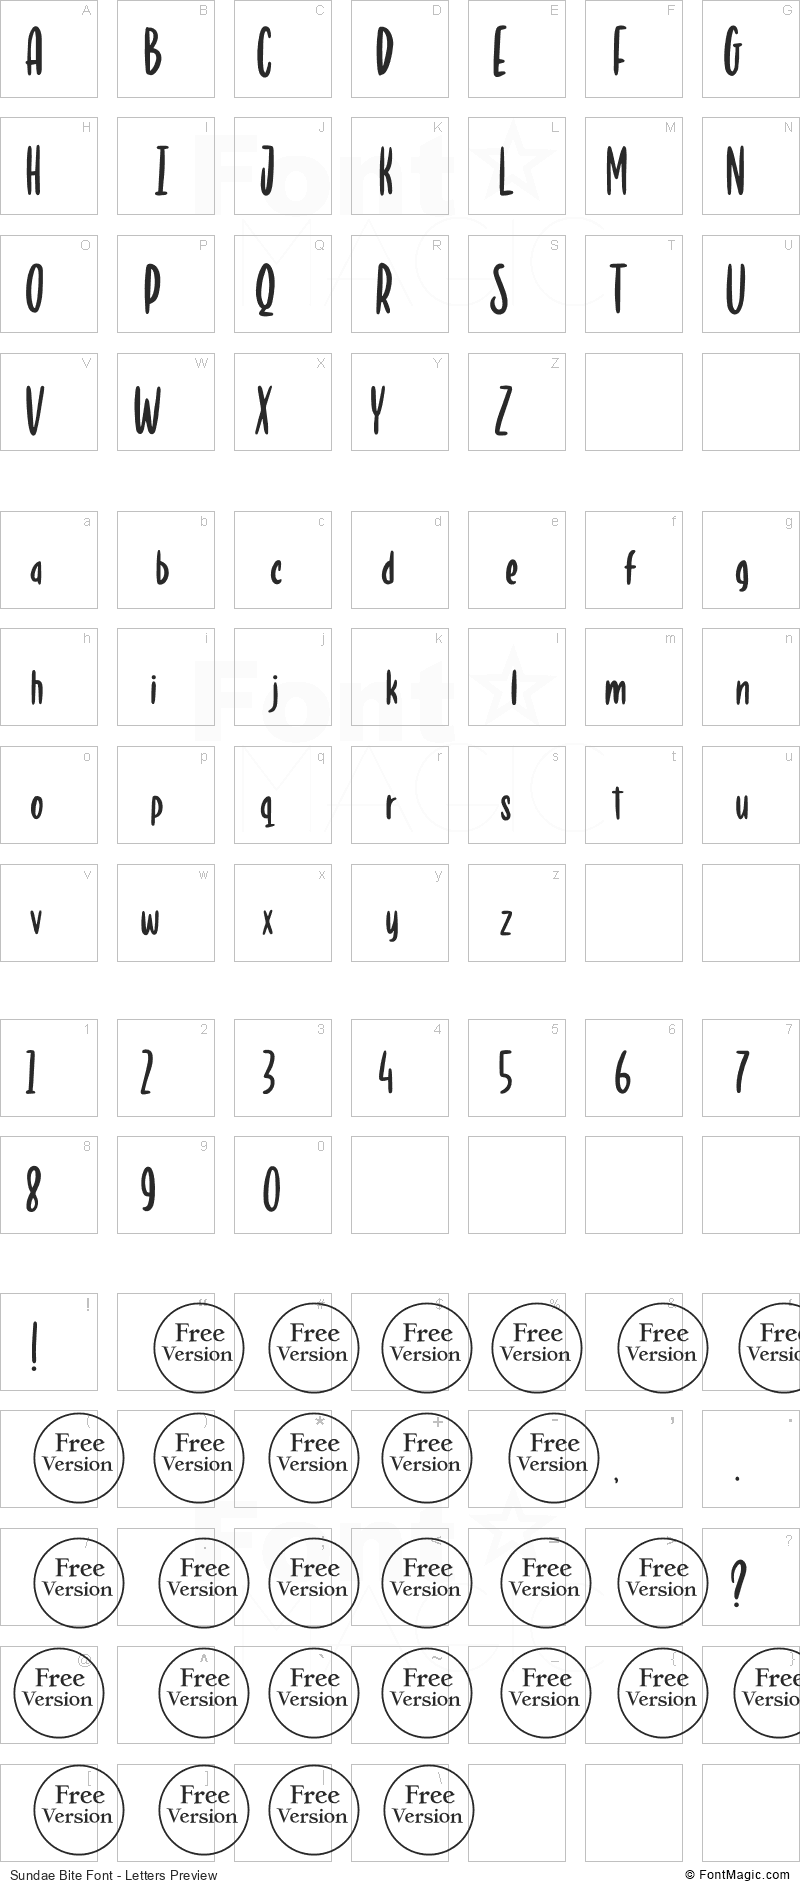 Sundae Bite Font - All Latters Preview Chart